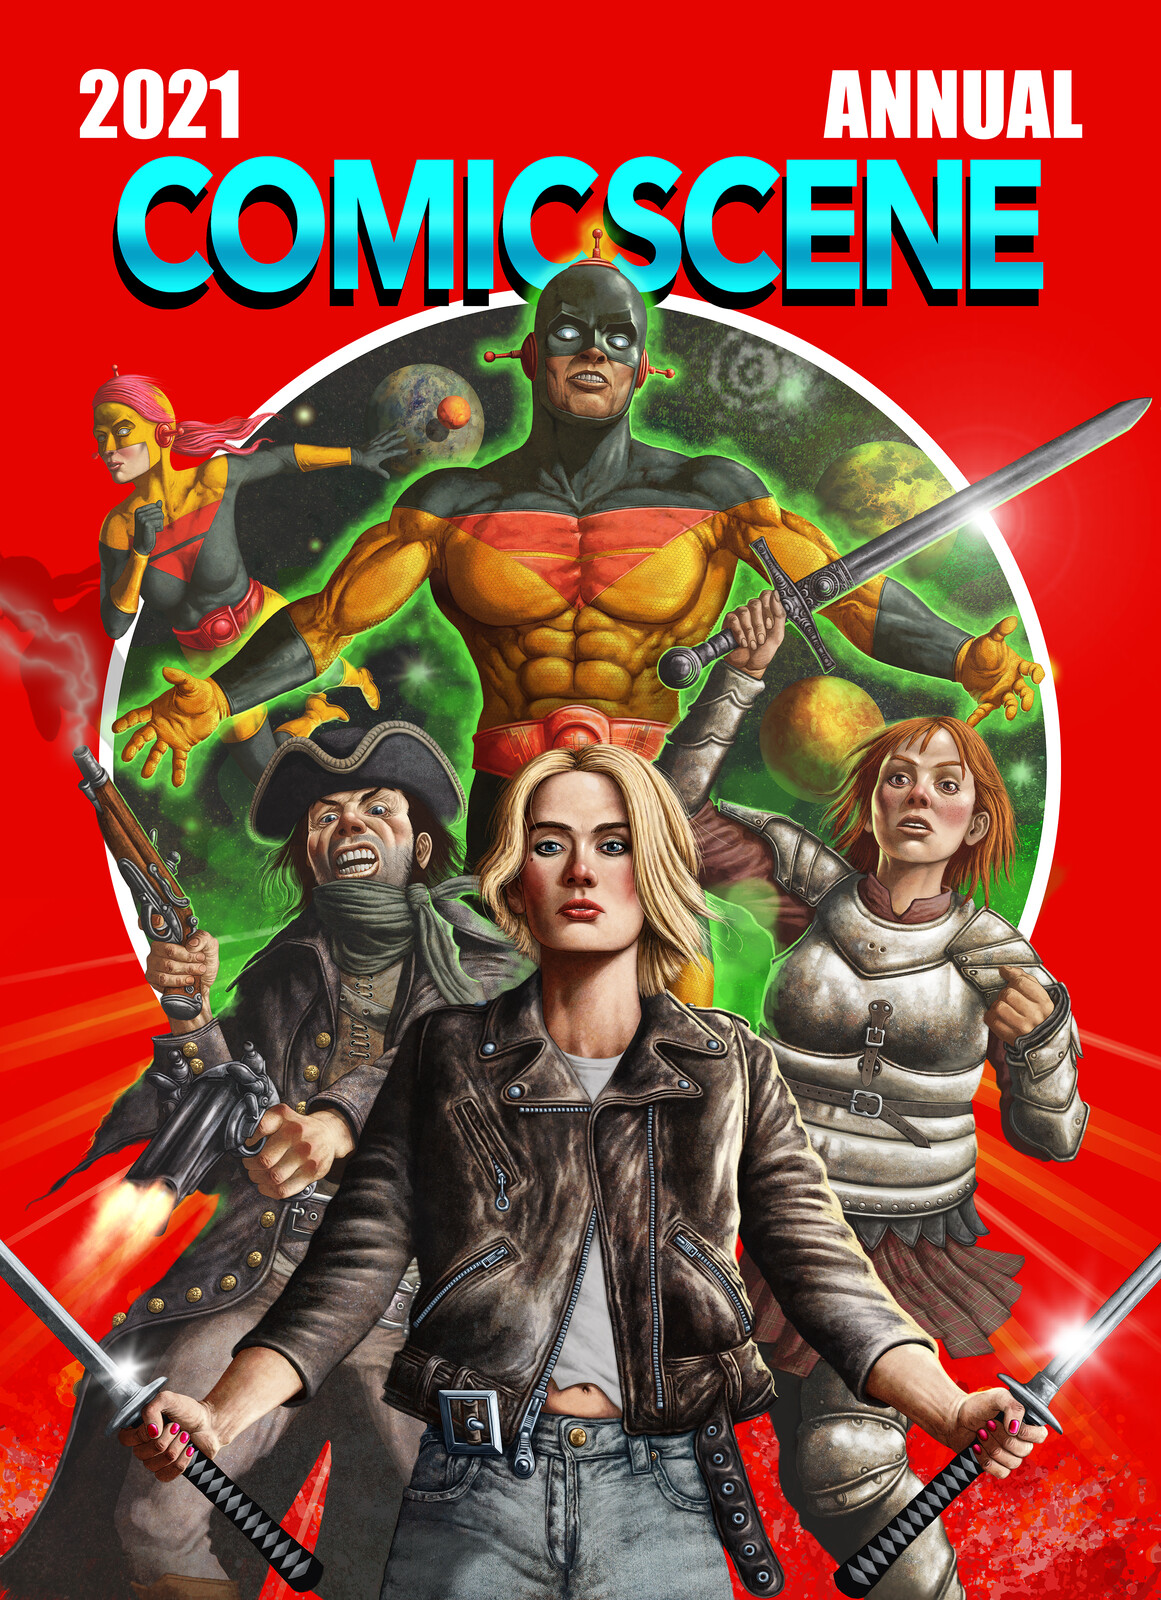 ComicScene 2021 Annual Cover ( text )